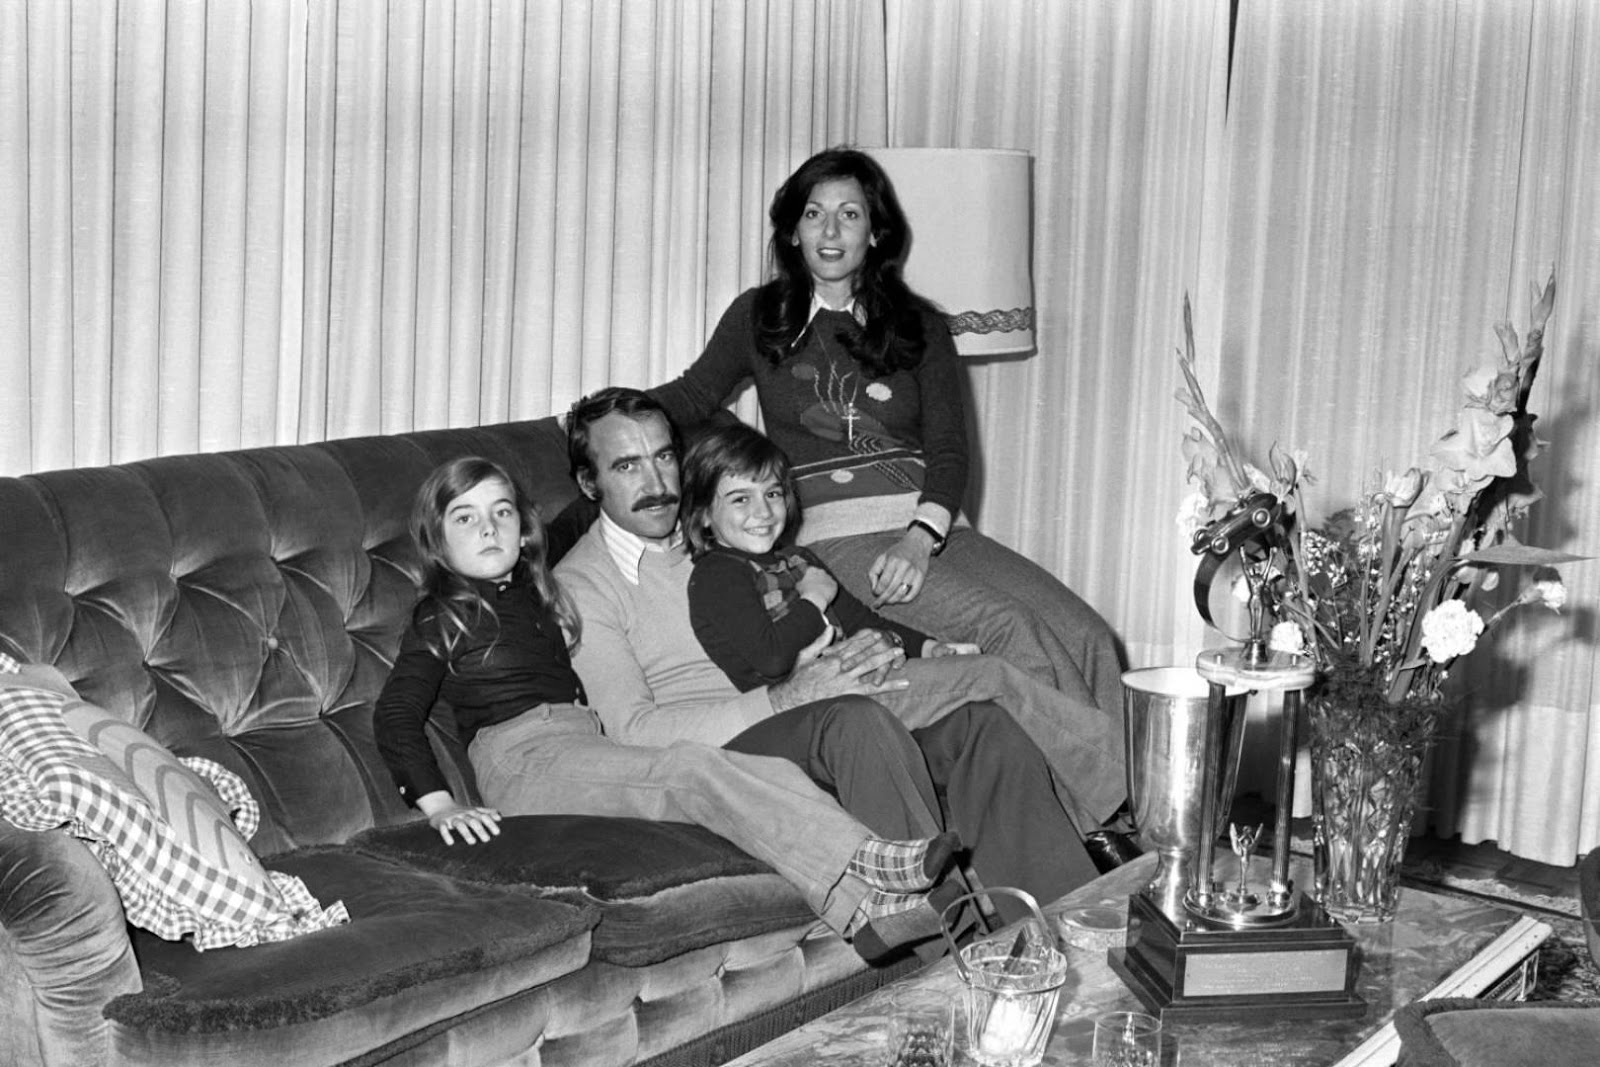 Clay Regazzoni with his family.